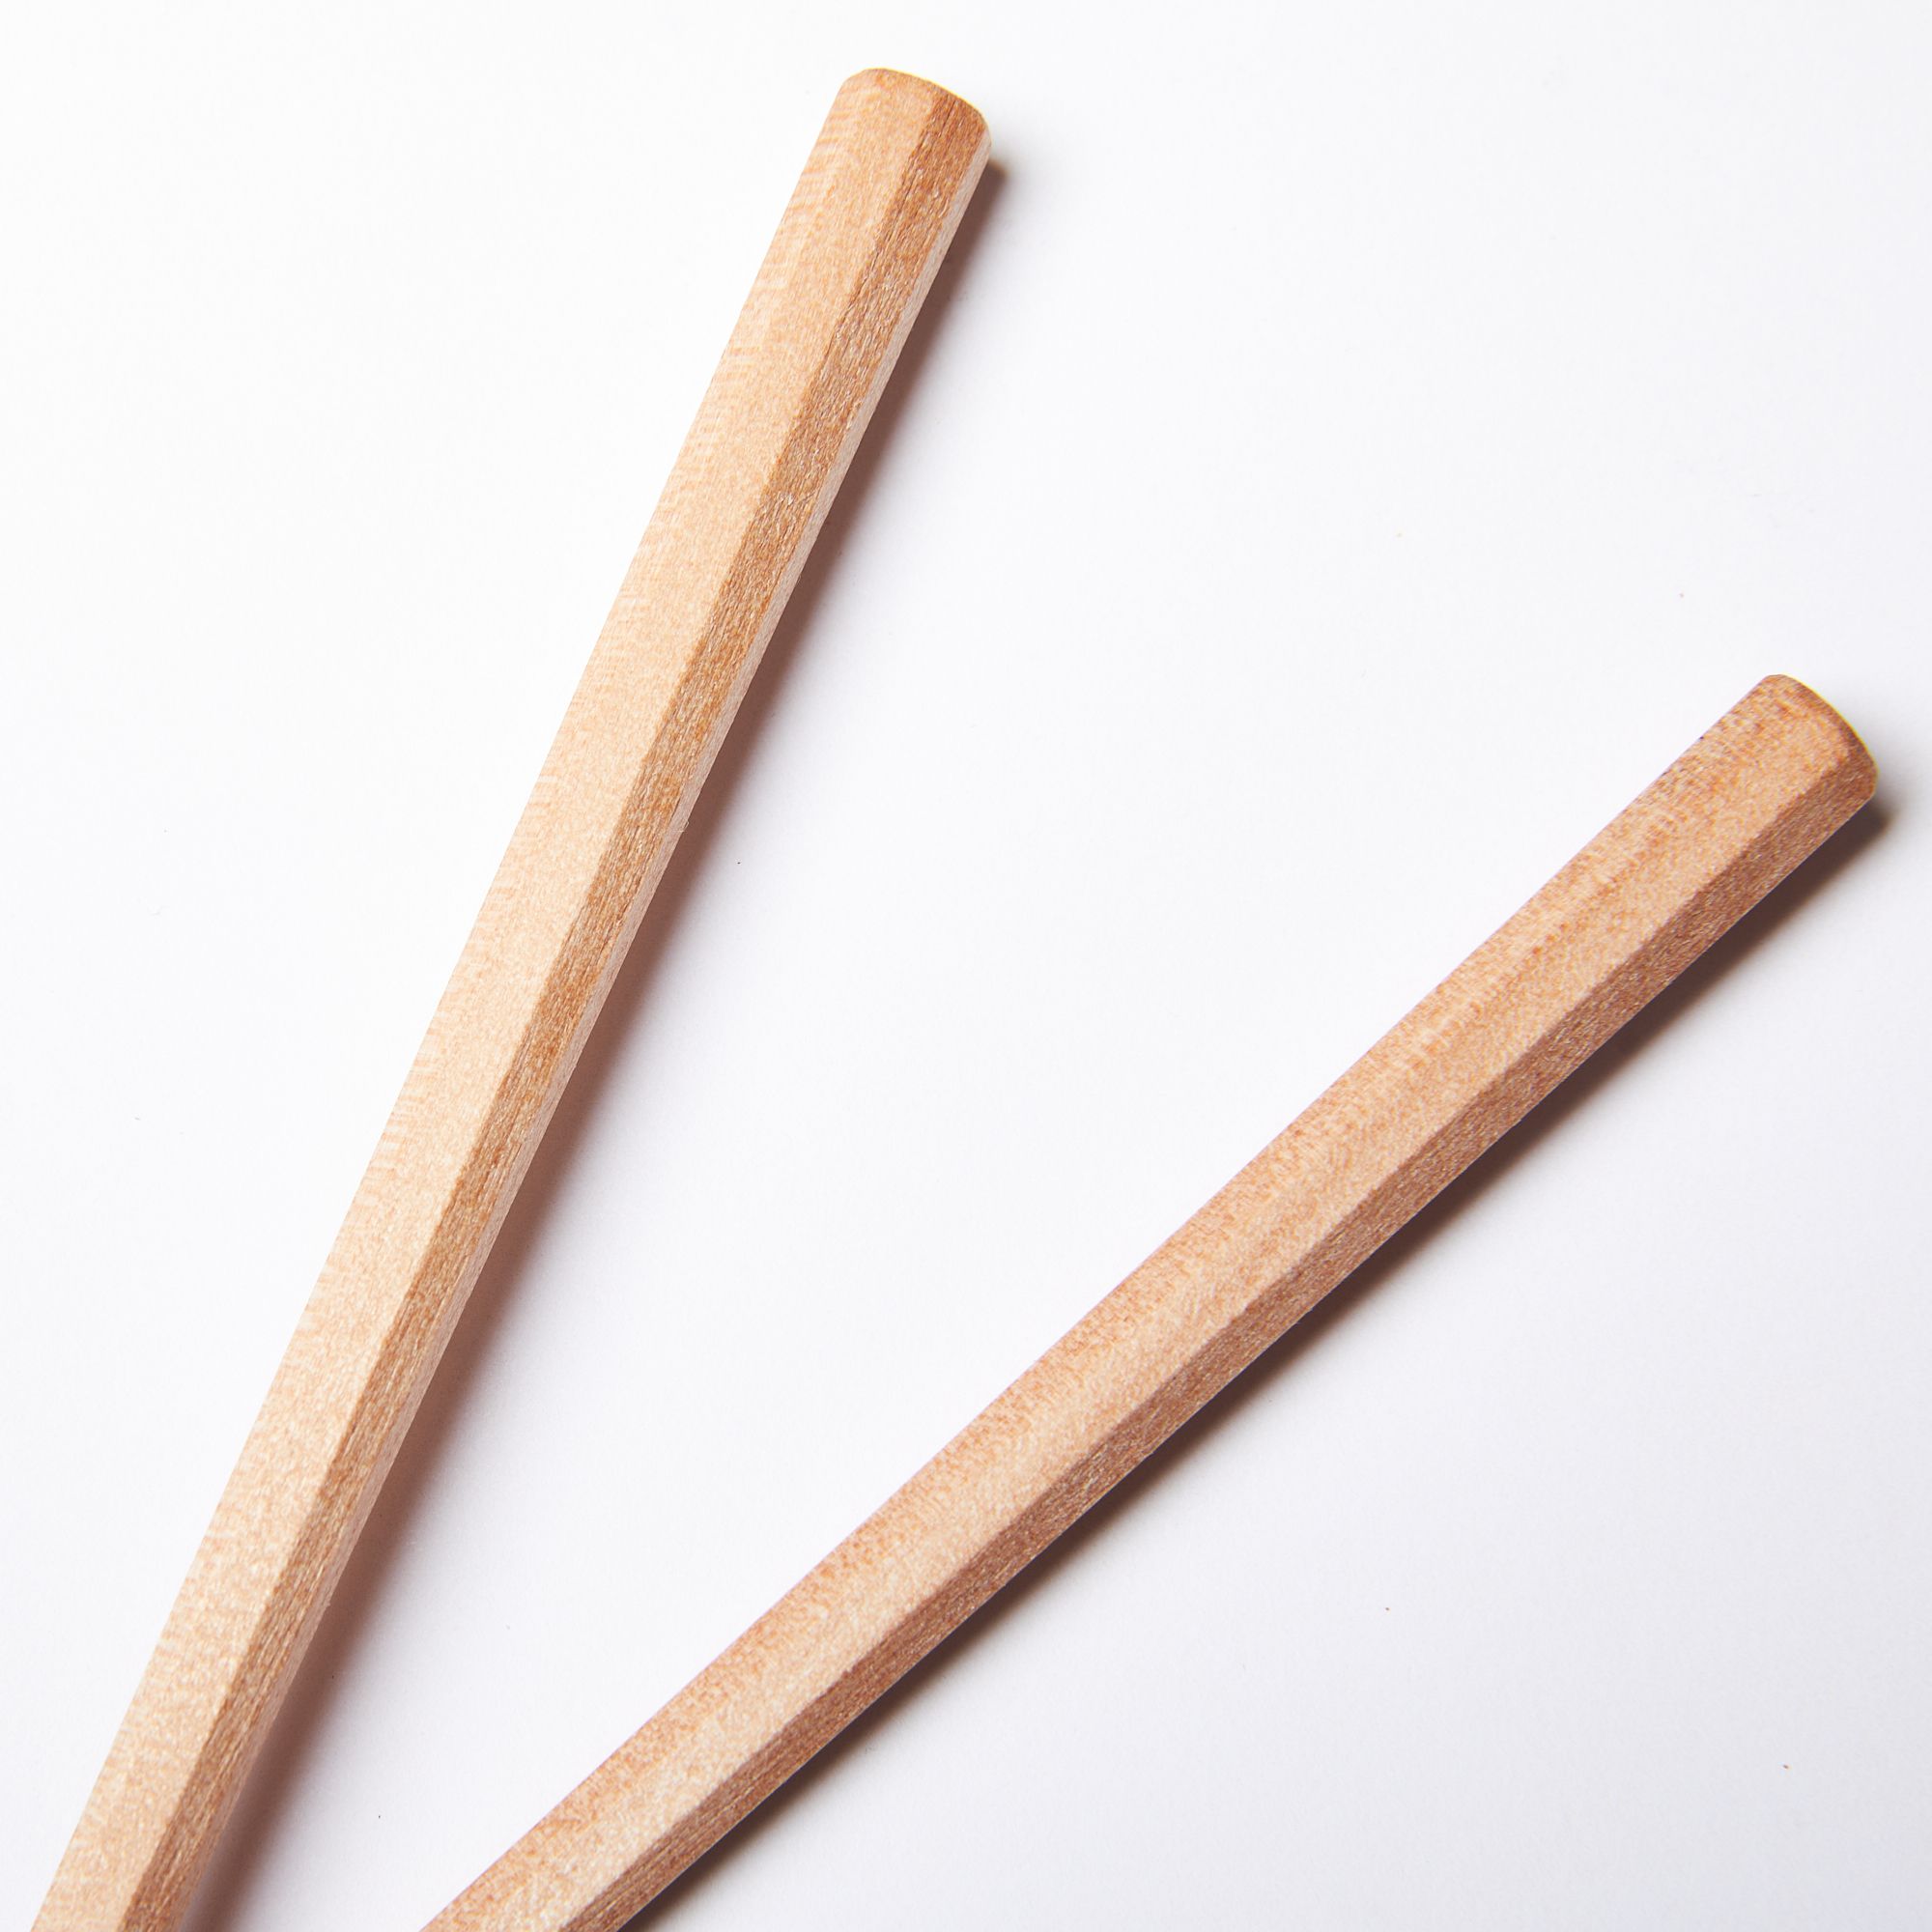 Tip of simple pair of light wood chopsticks